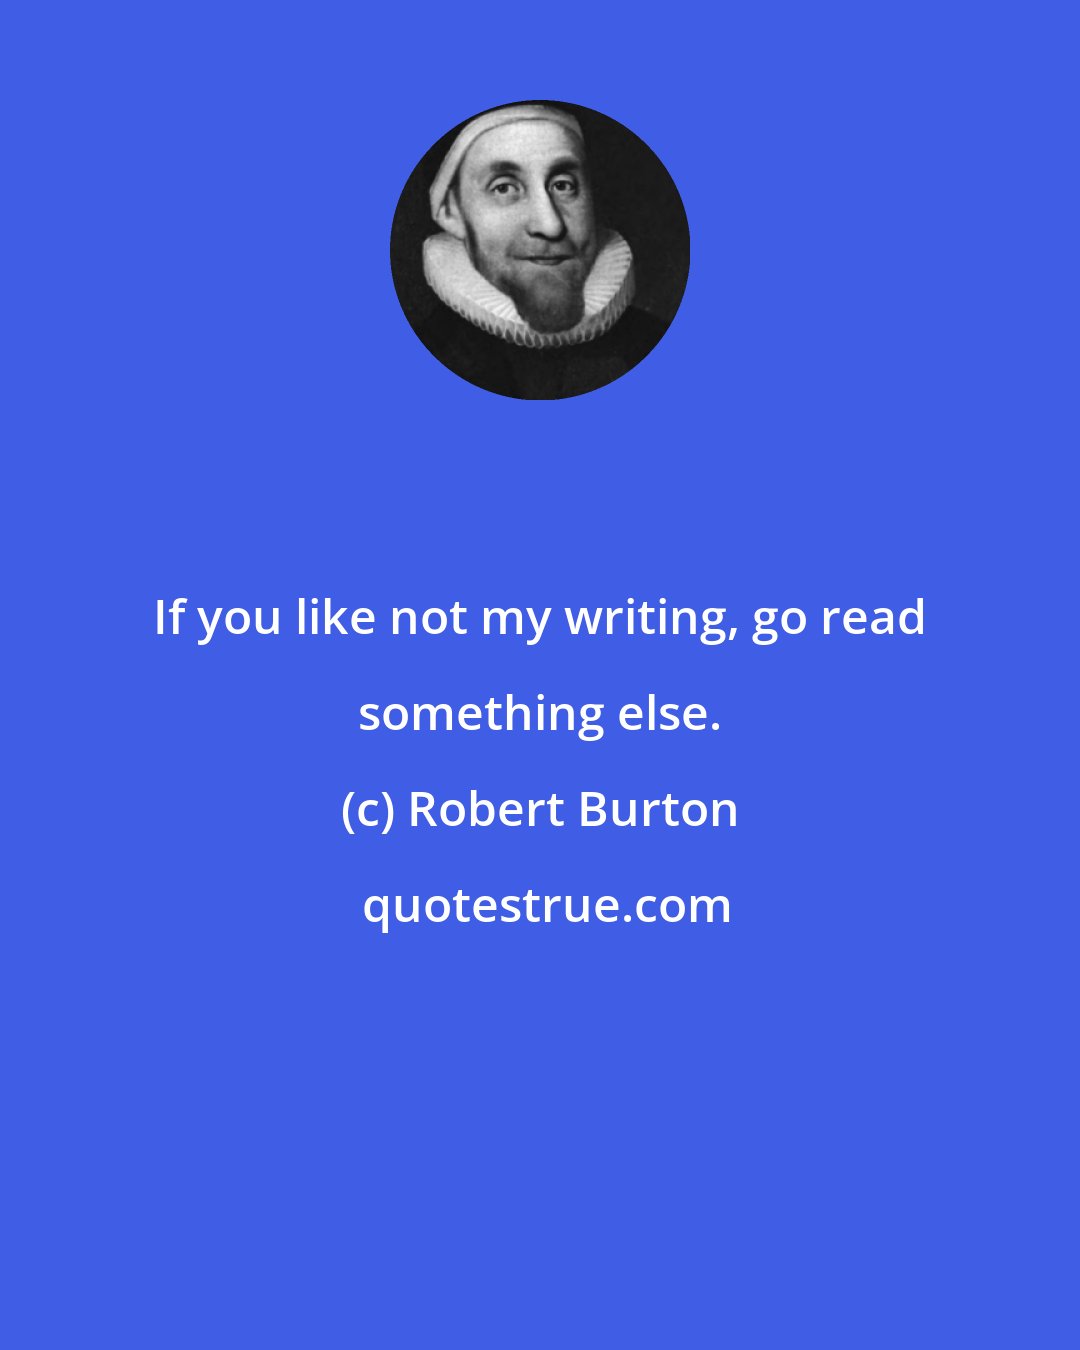 Robert Burton: If you like not my writing, go read something else.